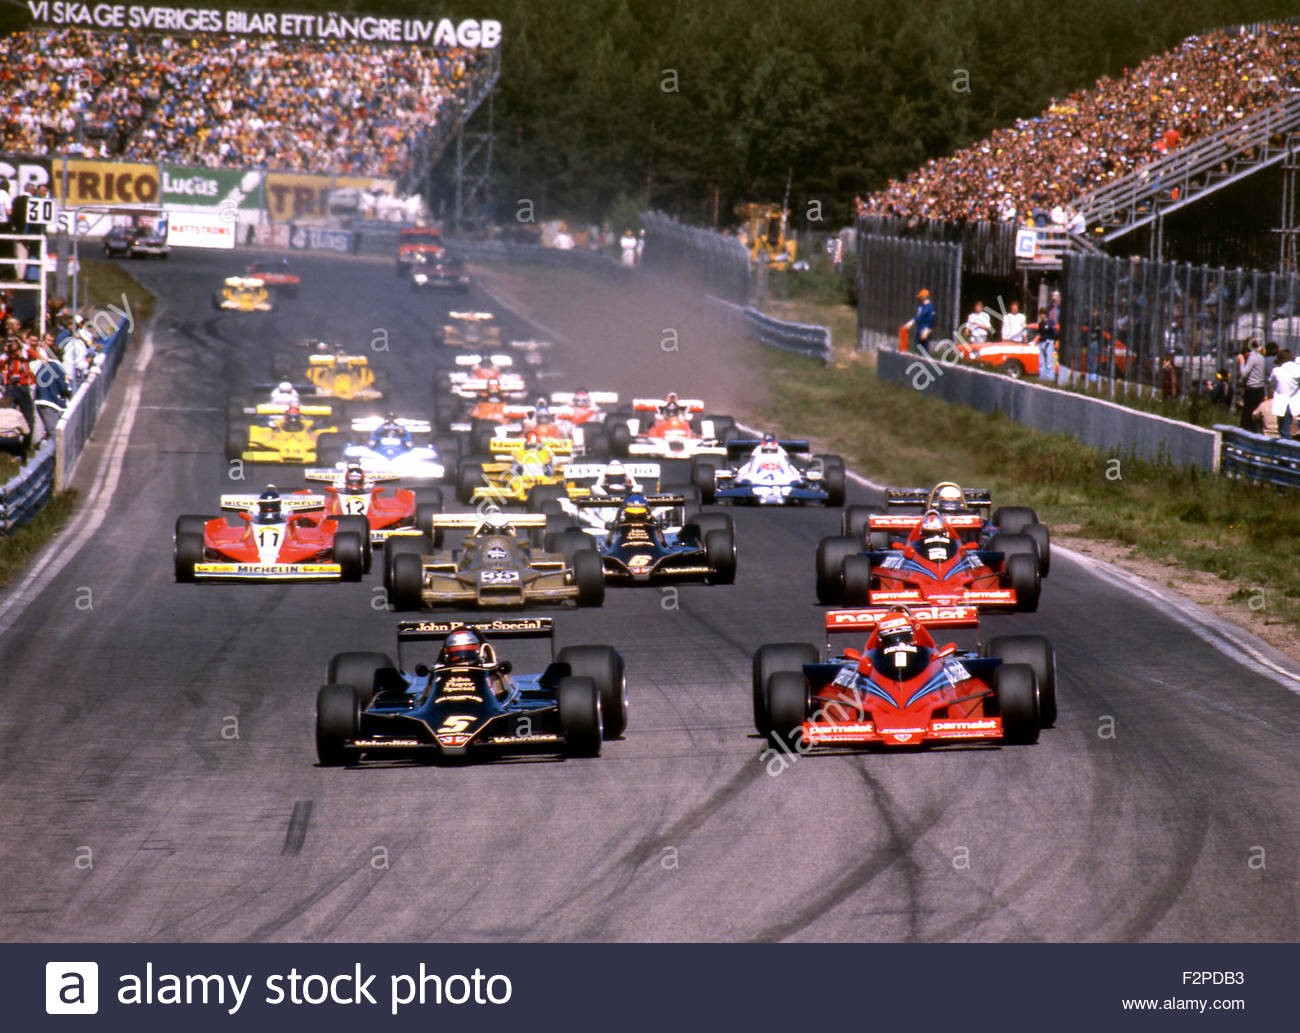 Start of the 1978 GP of Sweden in Anderstorp. 